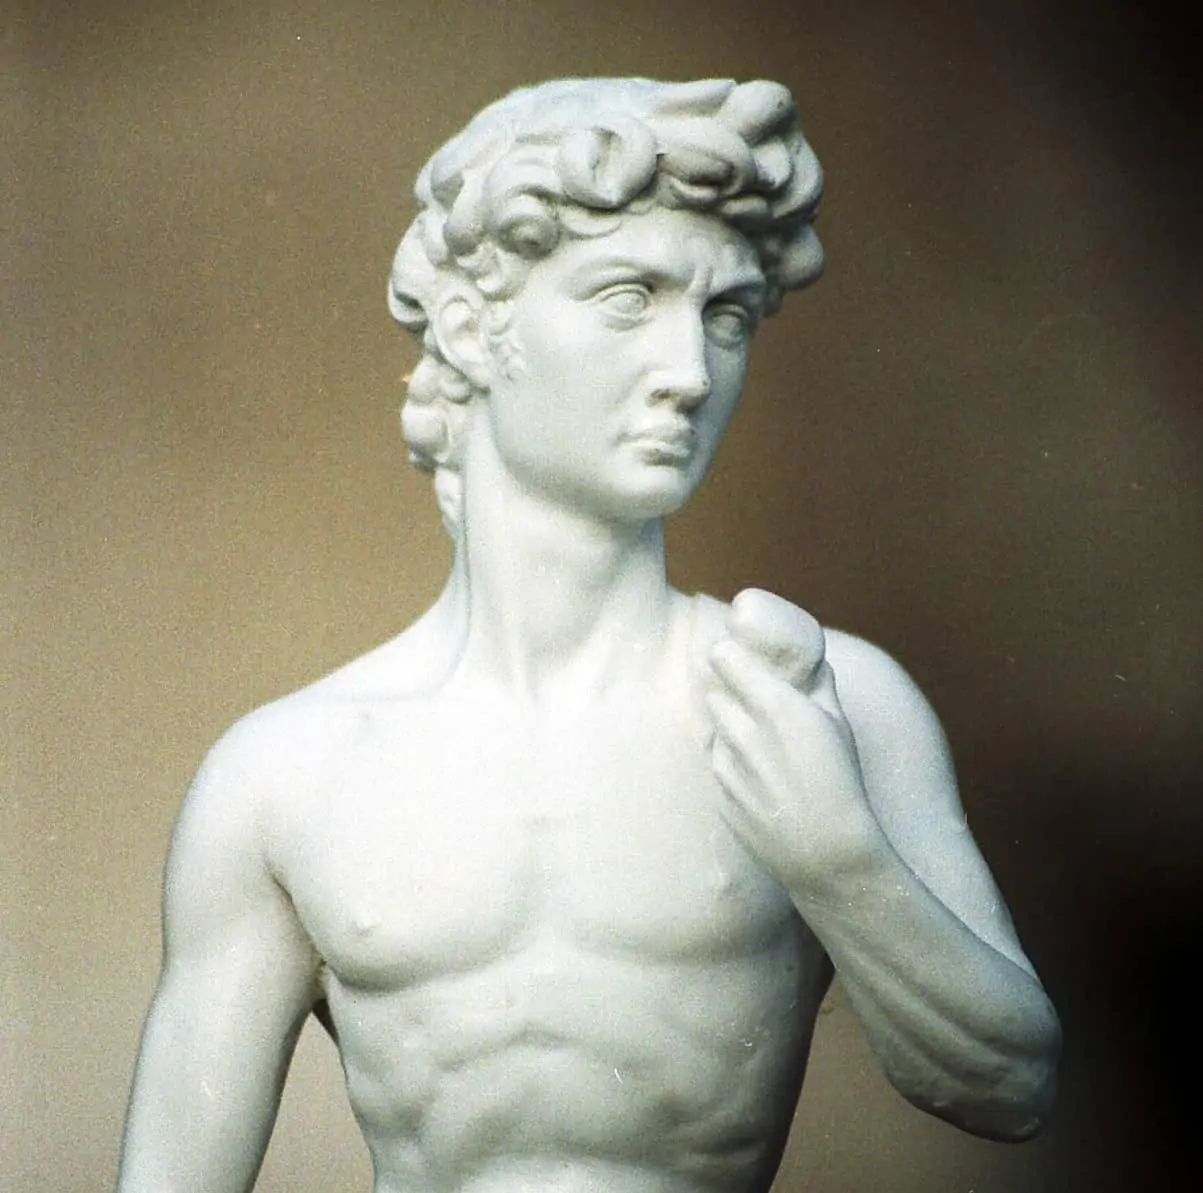 hero worship and gambling - photo of greek idealized statue